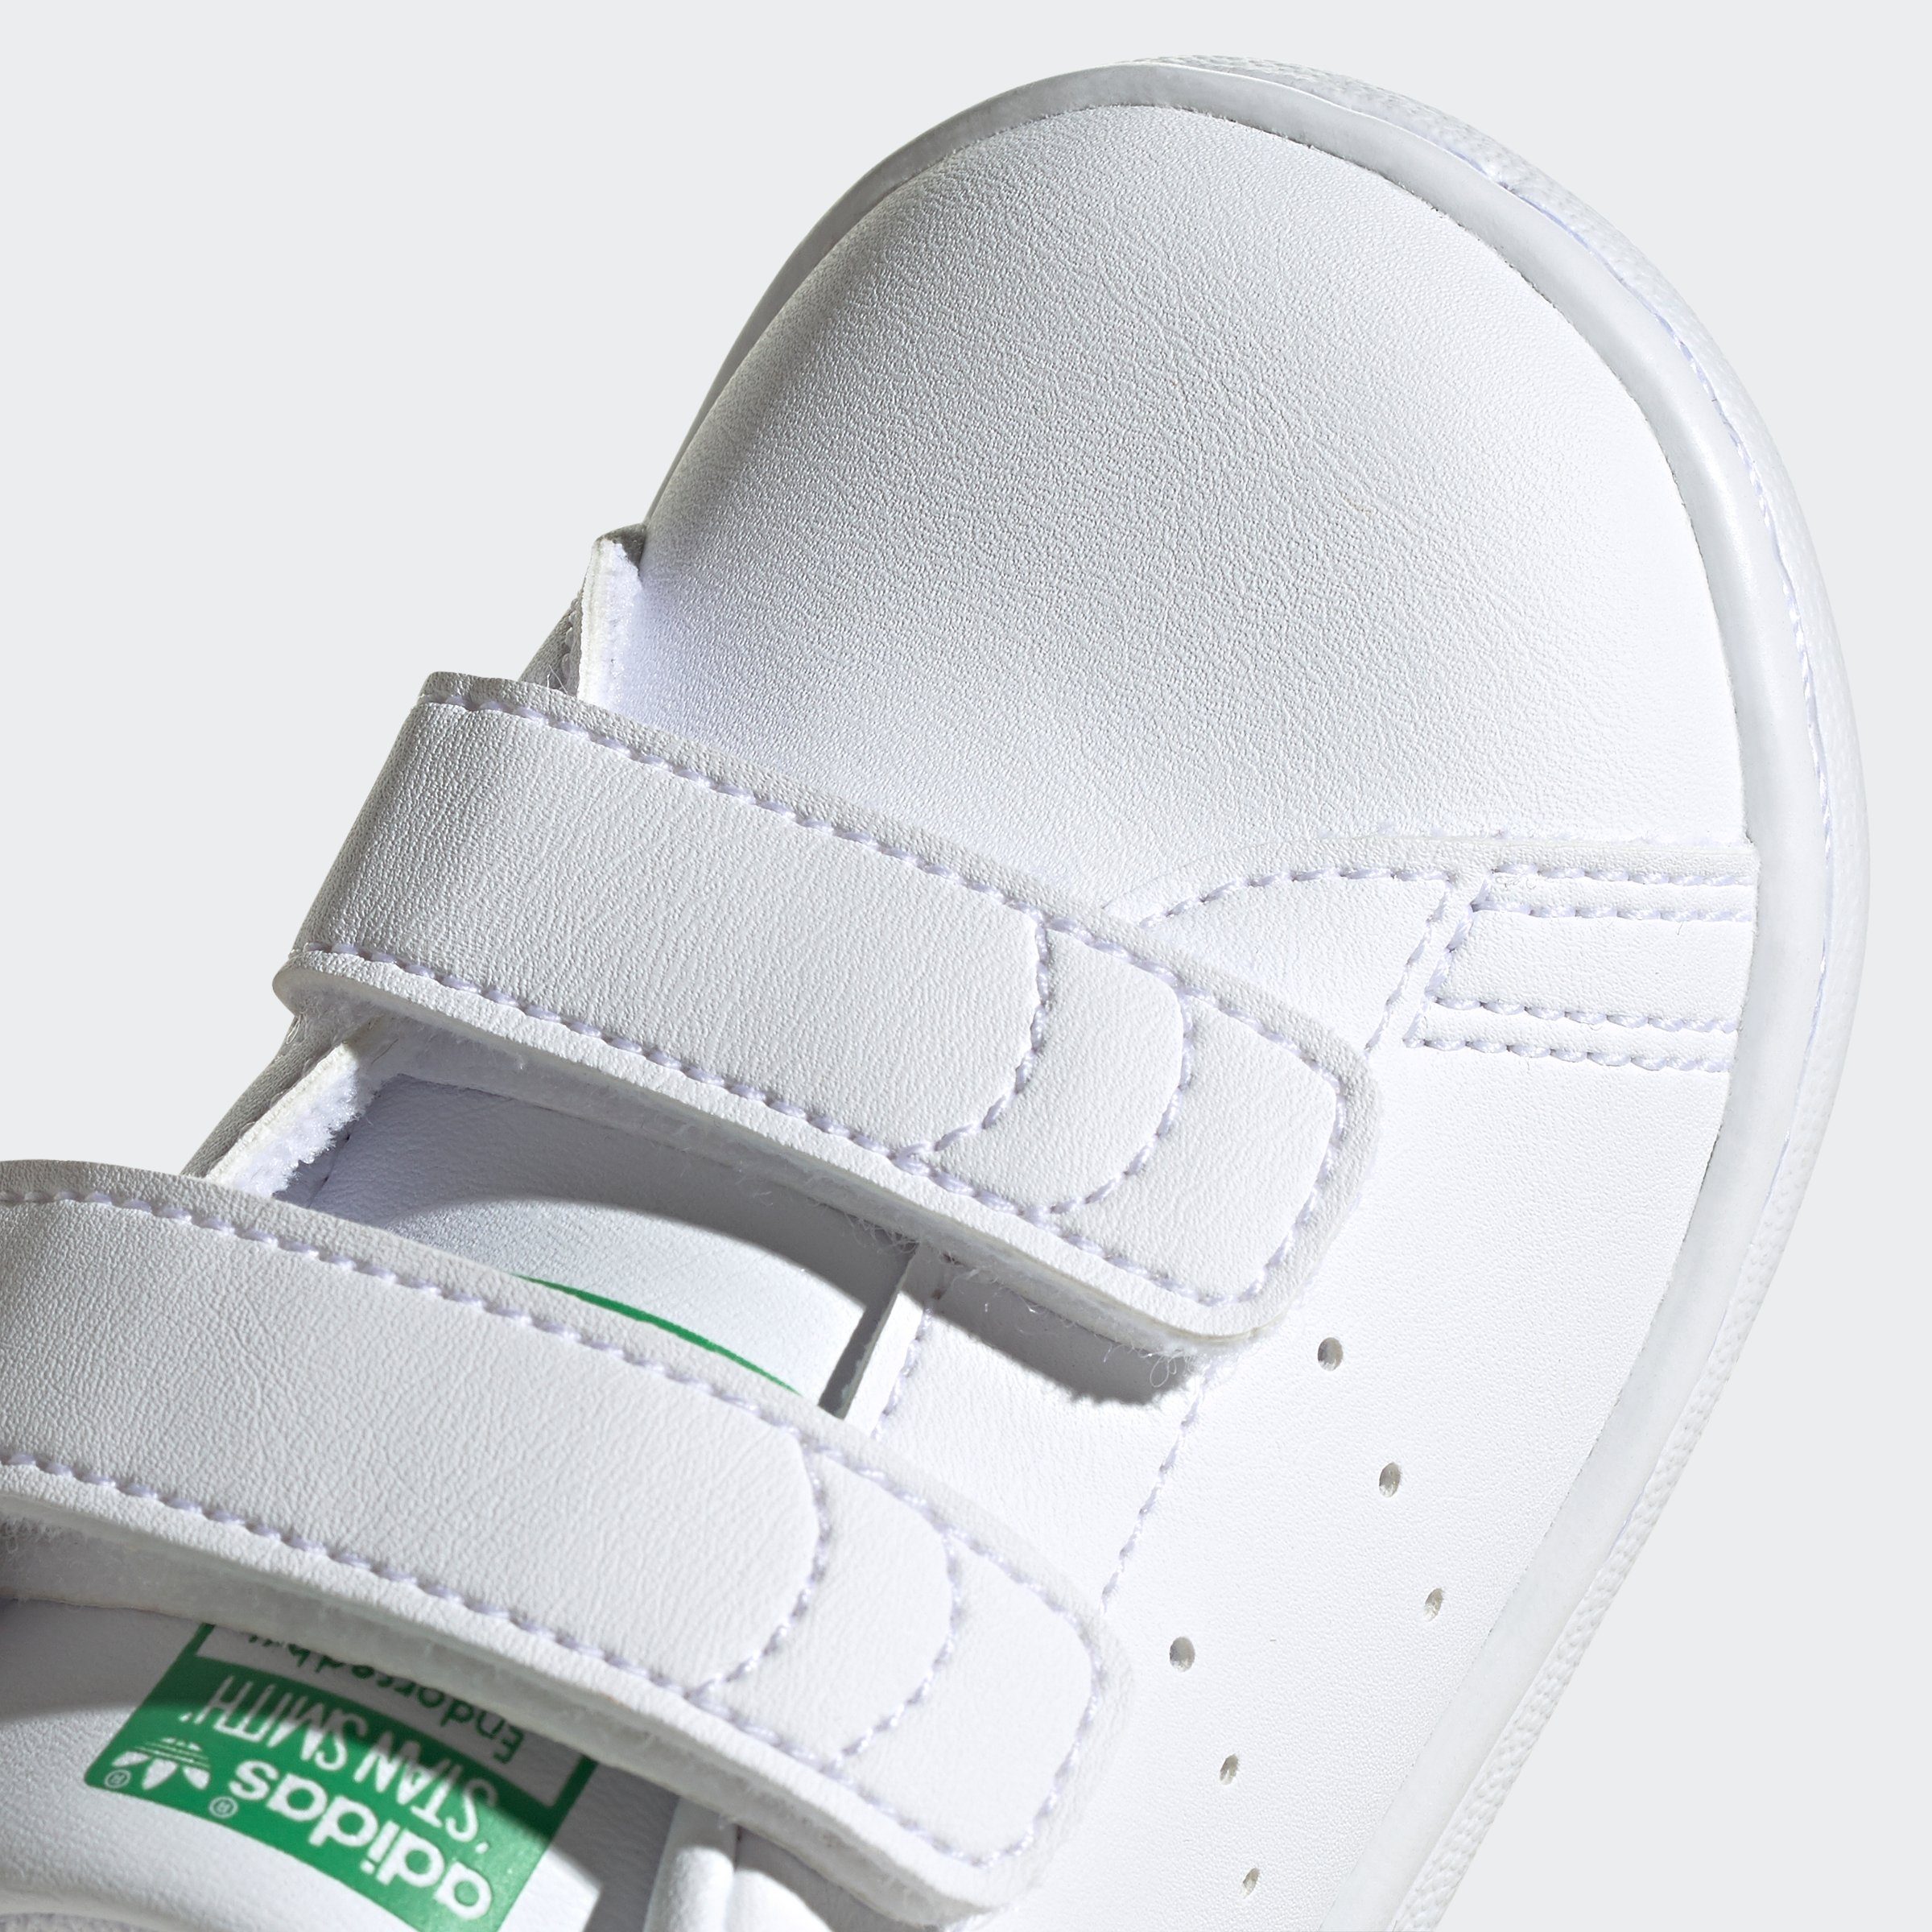 adidas Originals Cloud Sneaker White / STAN White / Green SMITH Cloud